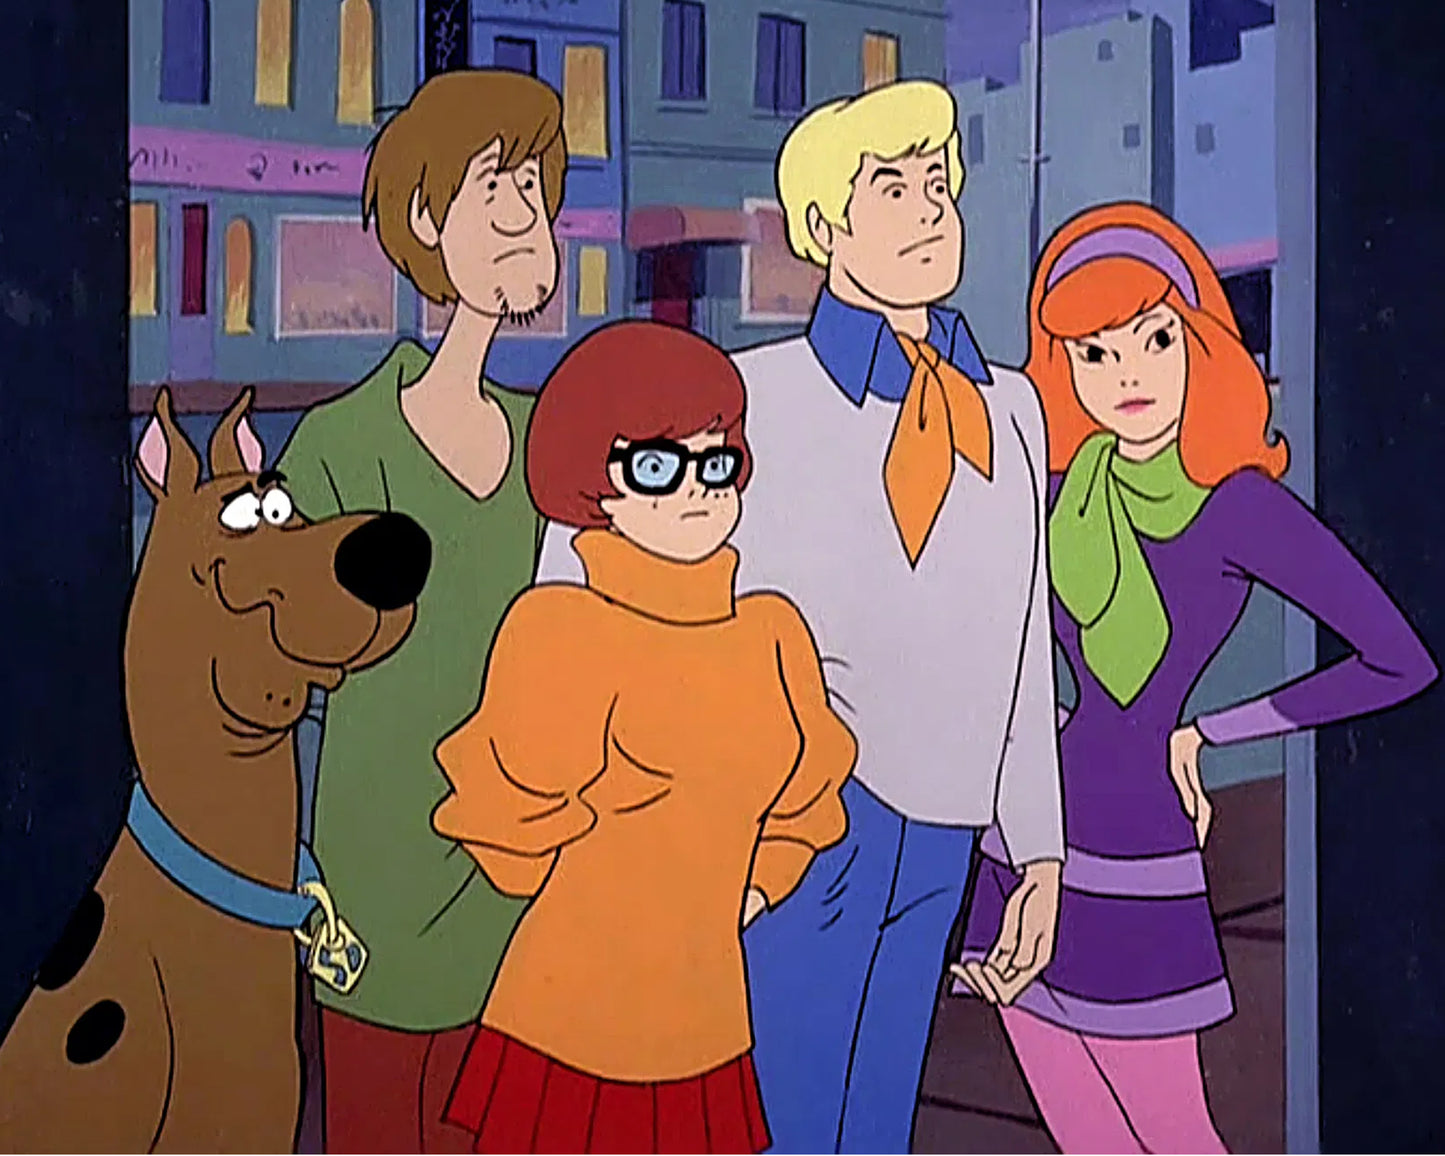 Frank Welker - Signed Scooby Doo Image #16 (8x10)